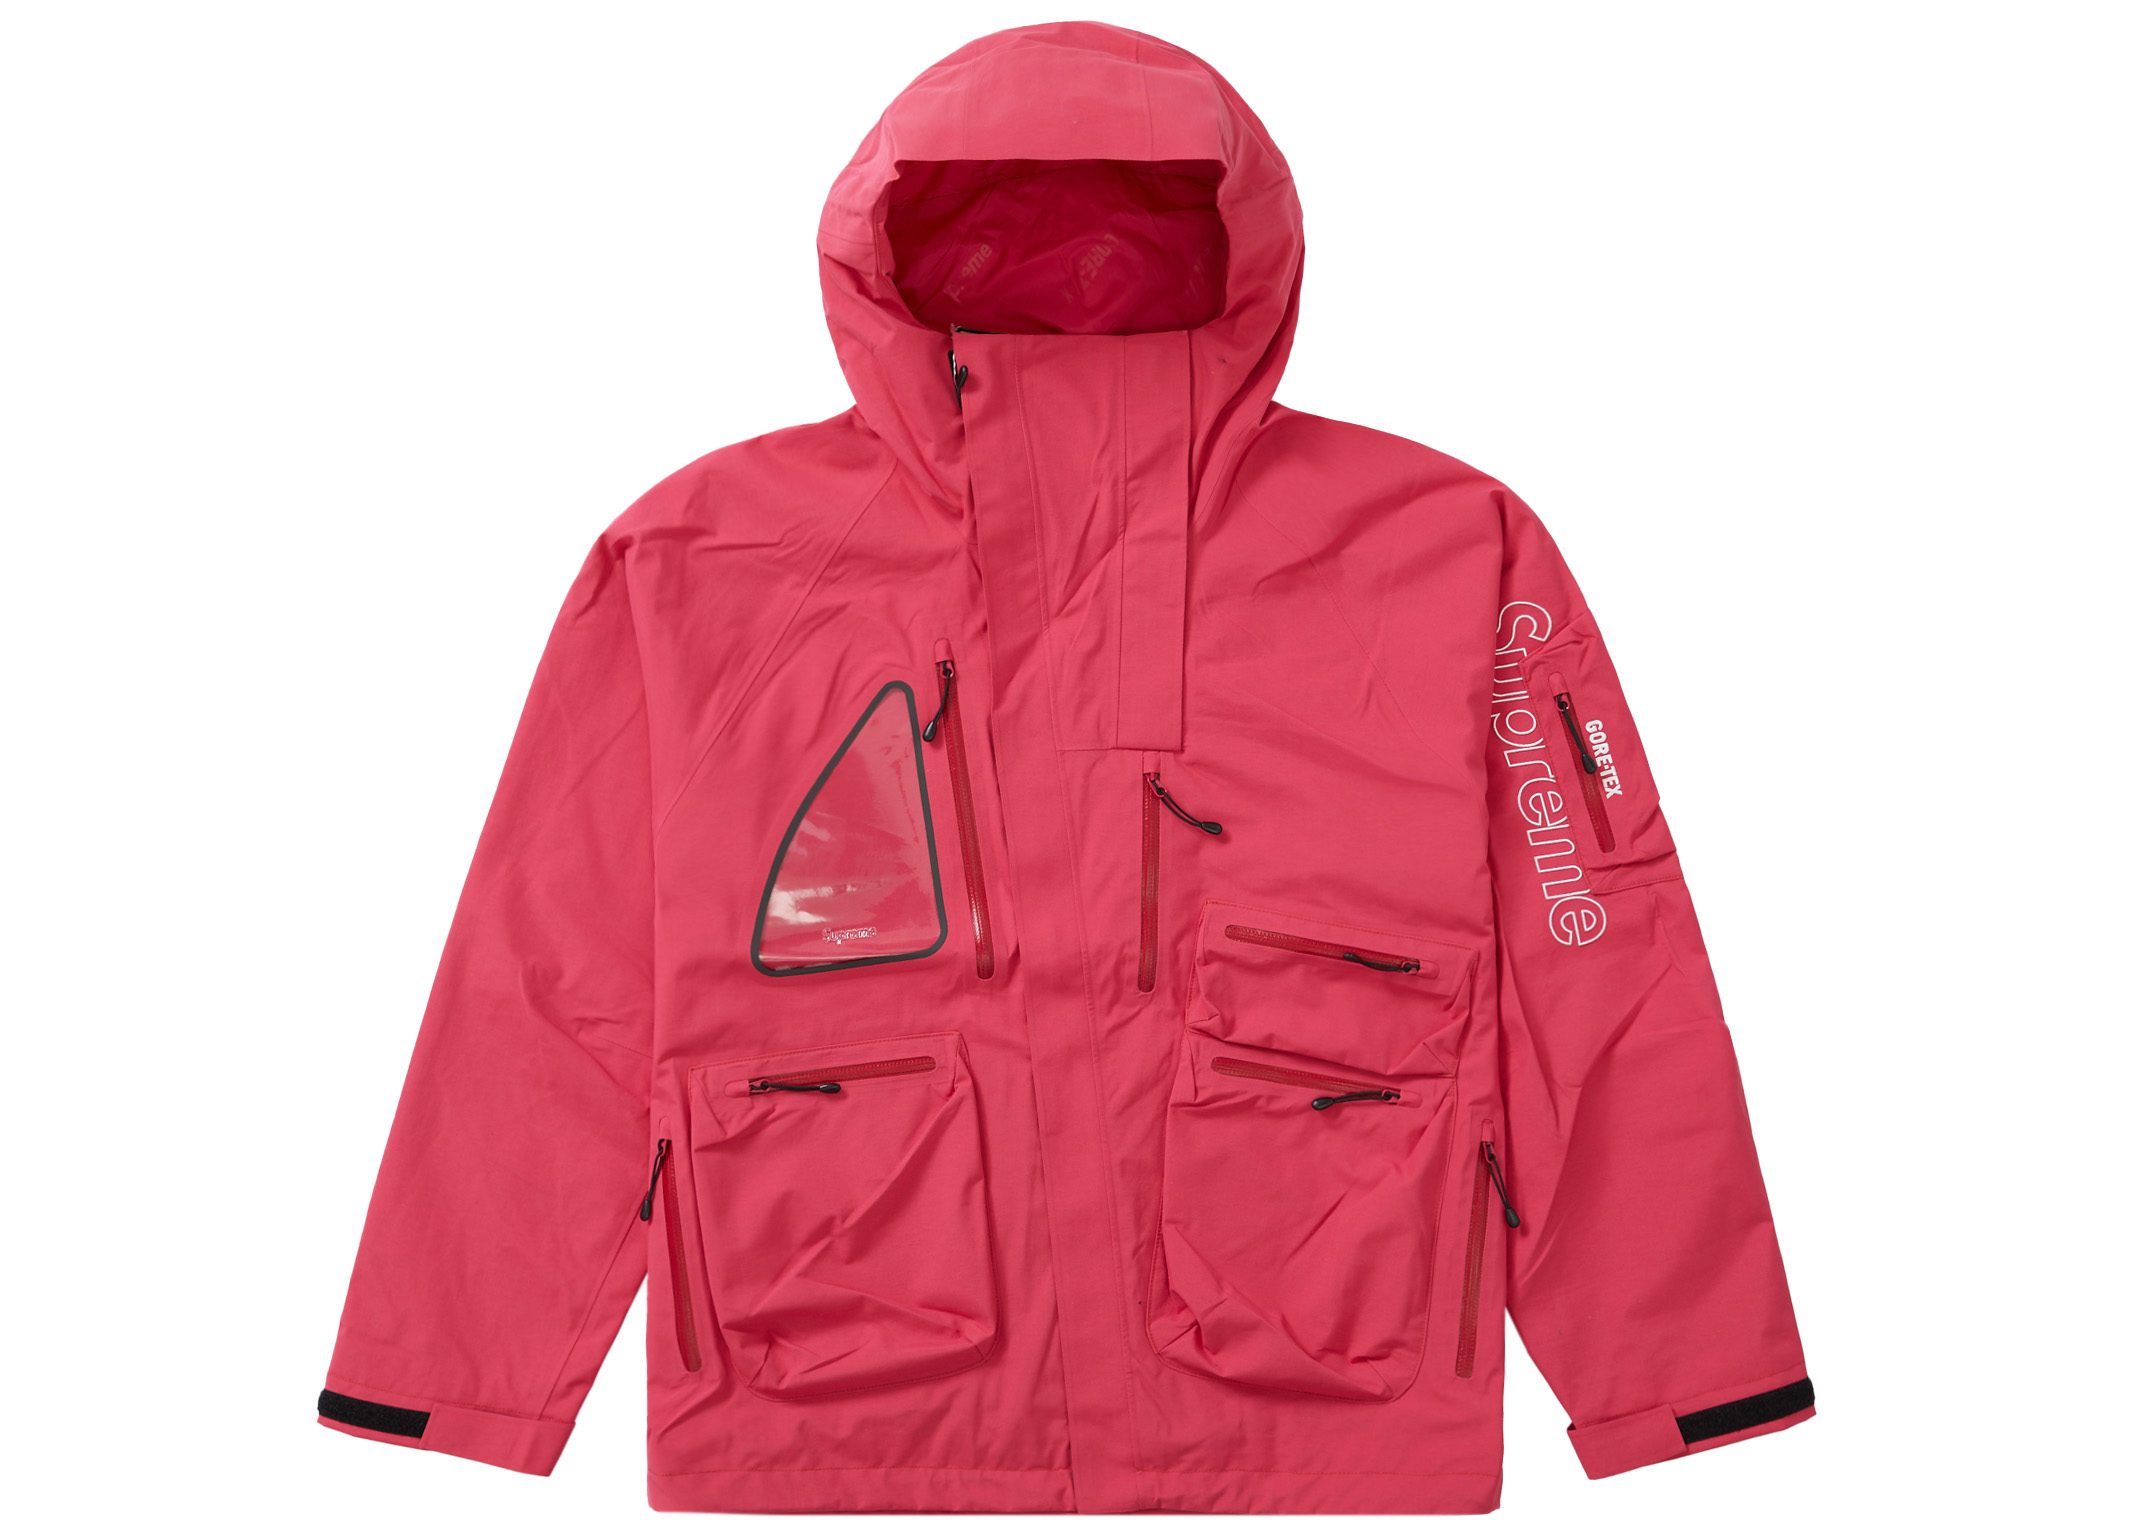 Supreme GORE-TEX Tech Shell Jacket Pink - FW21 Men's - US